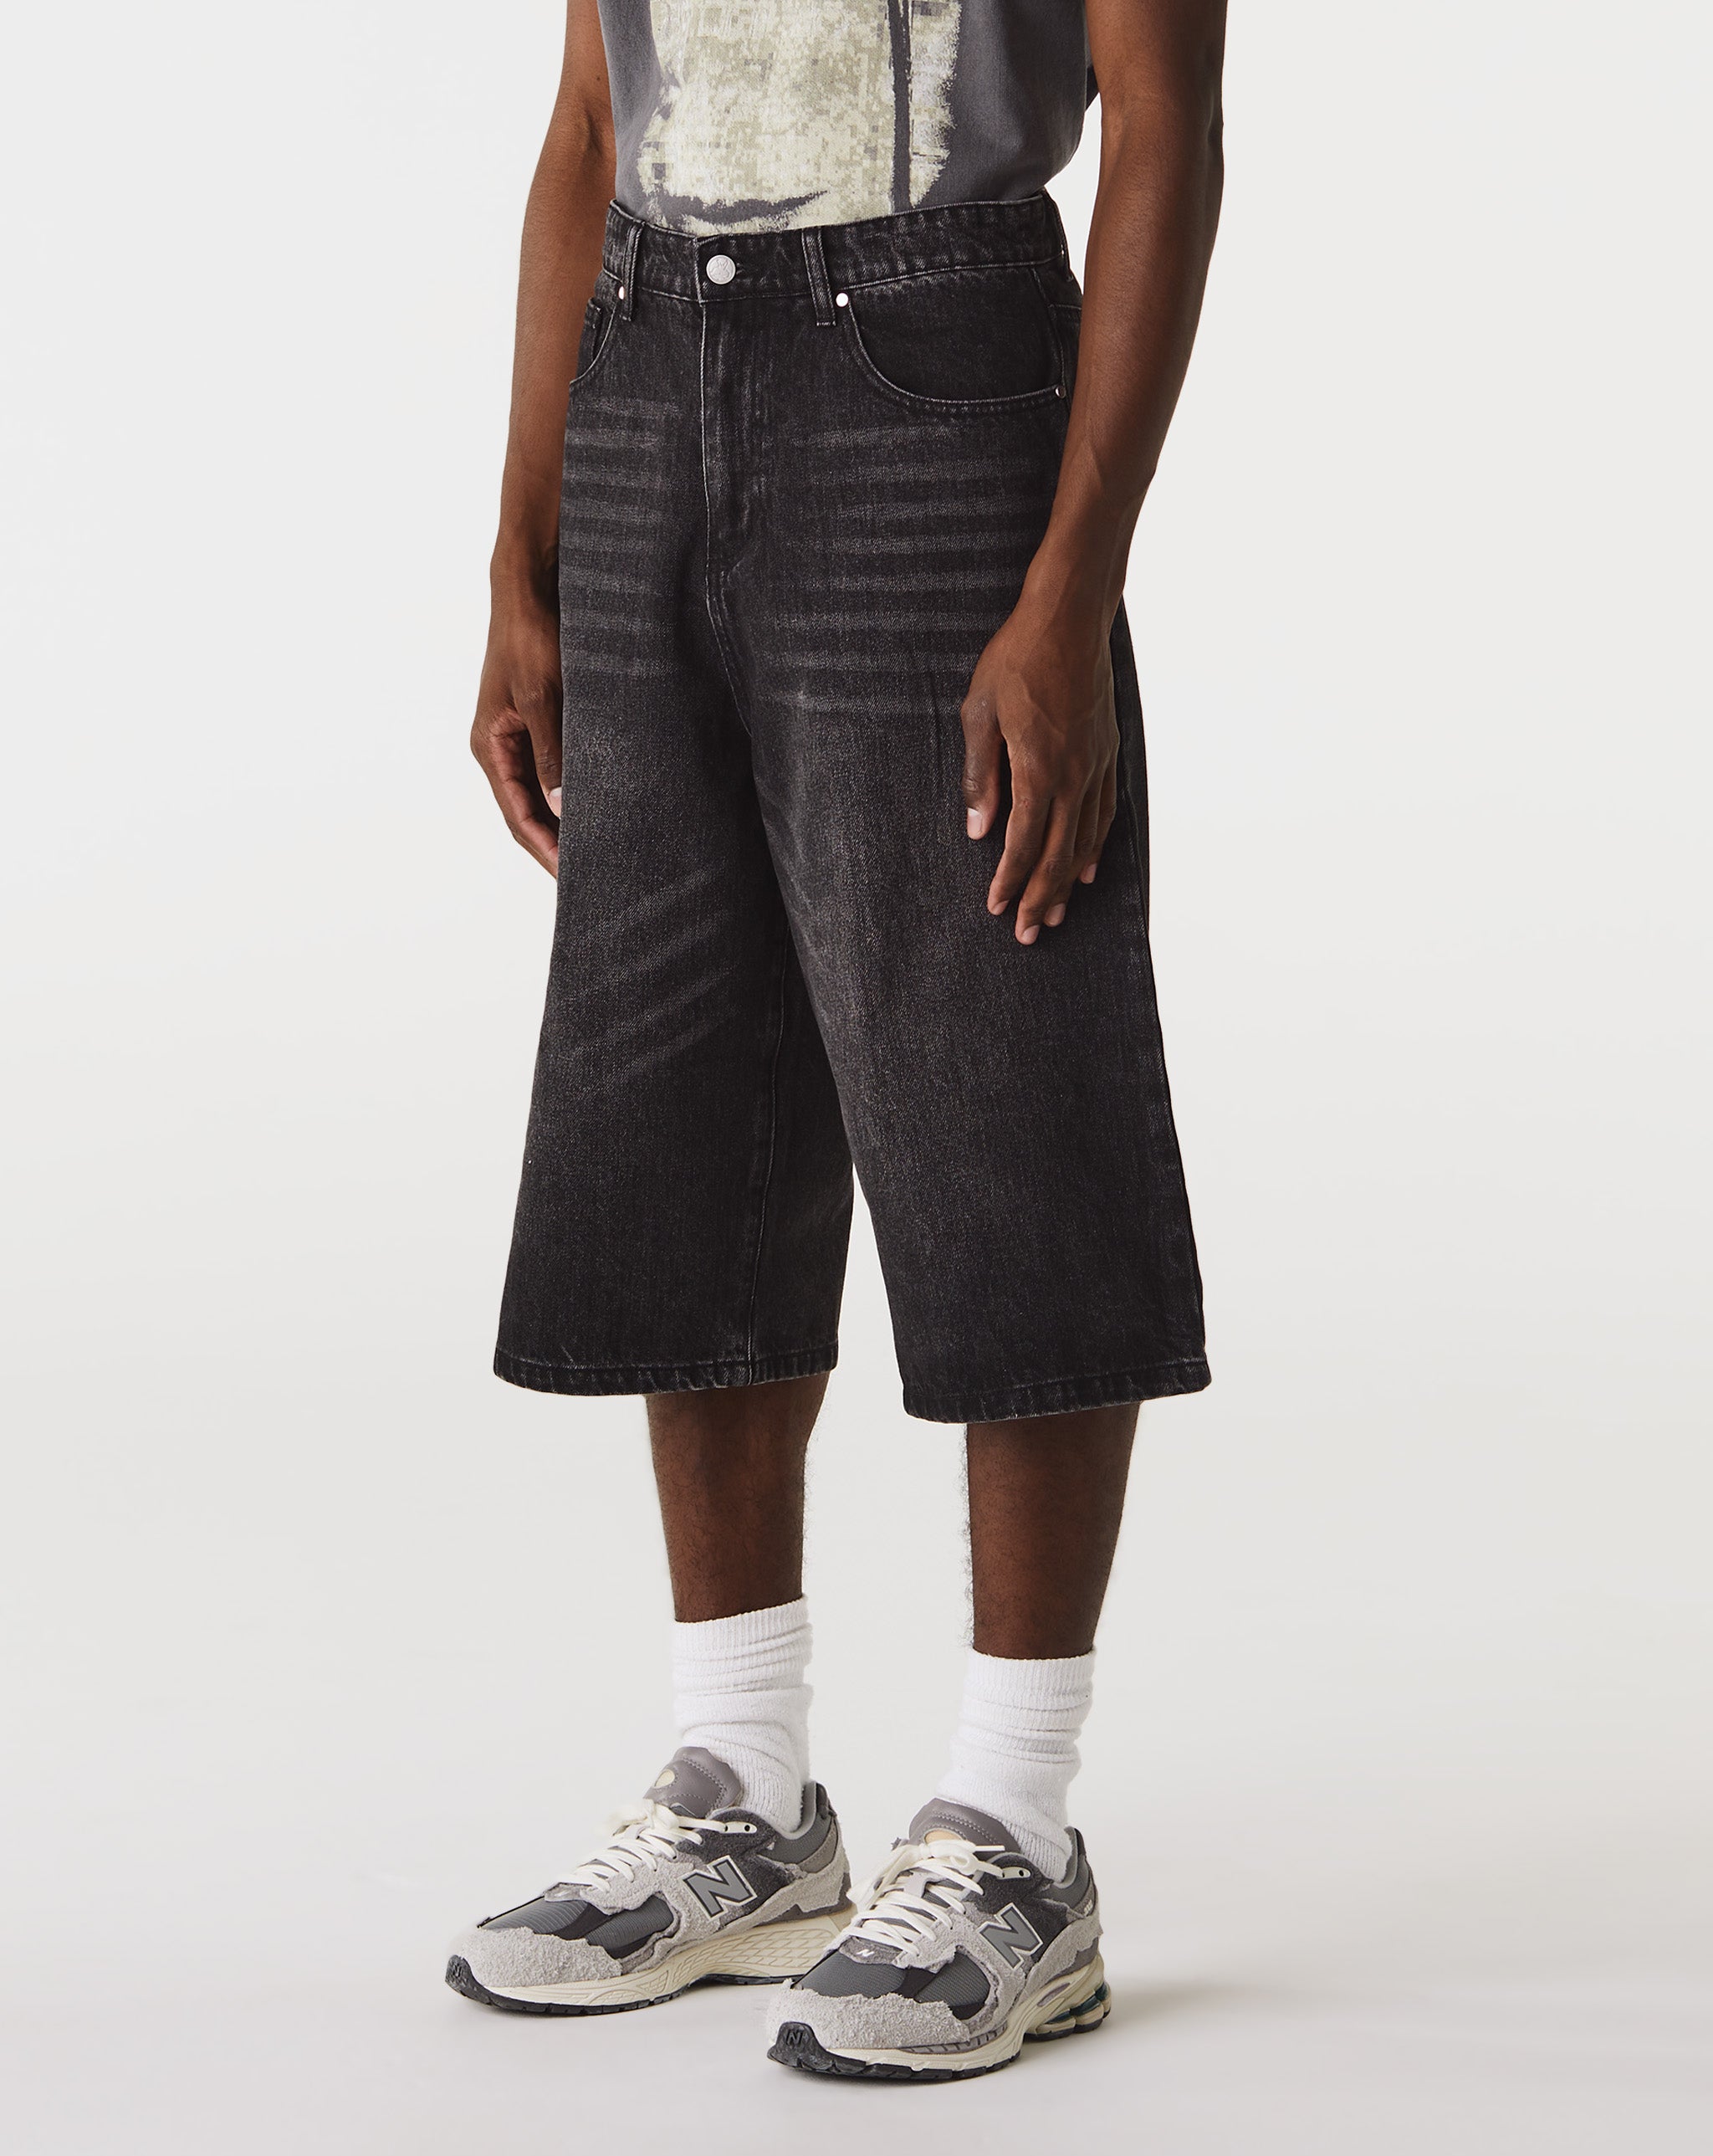 Basketcase Gallery Breacher Denim Shorts  - Cheap 127-0 Jordan outlet